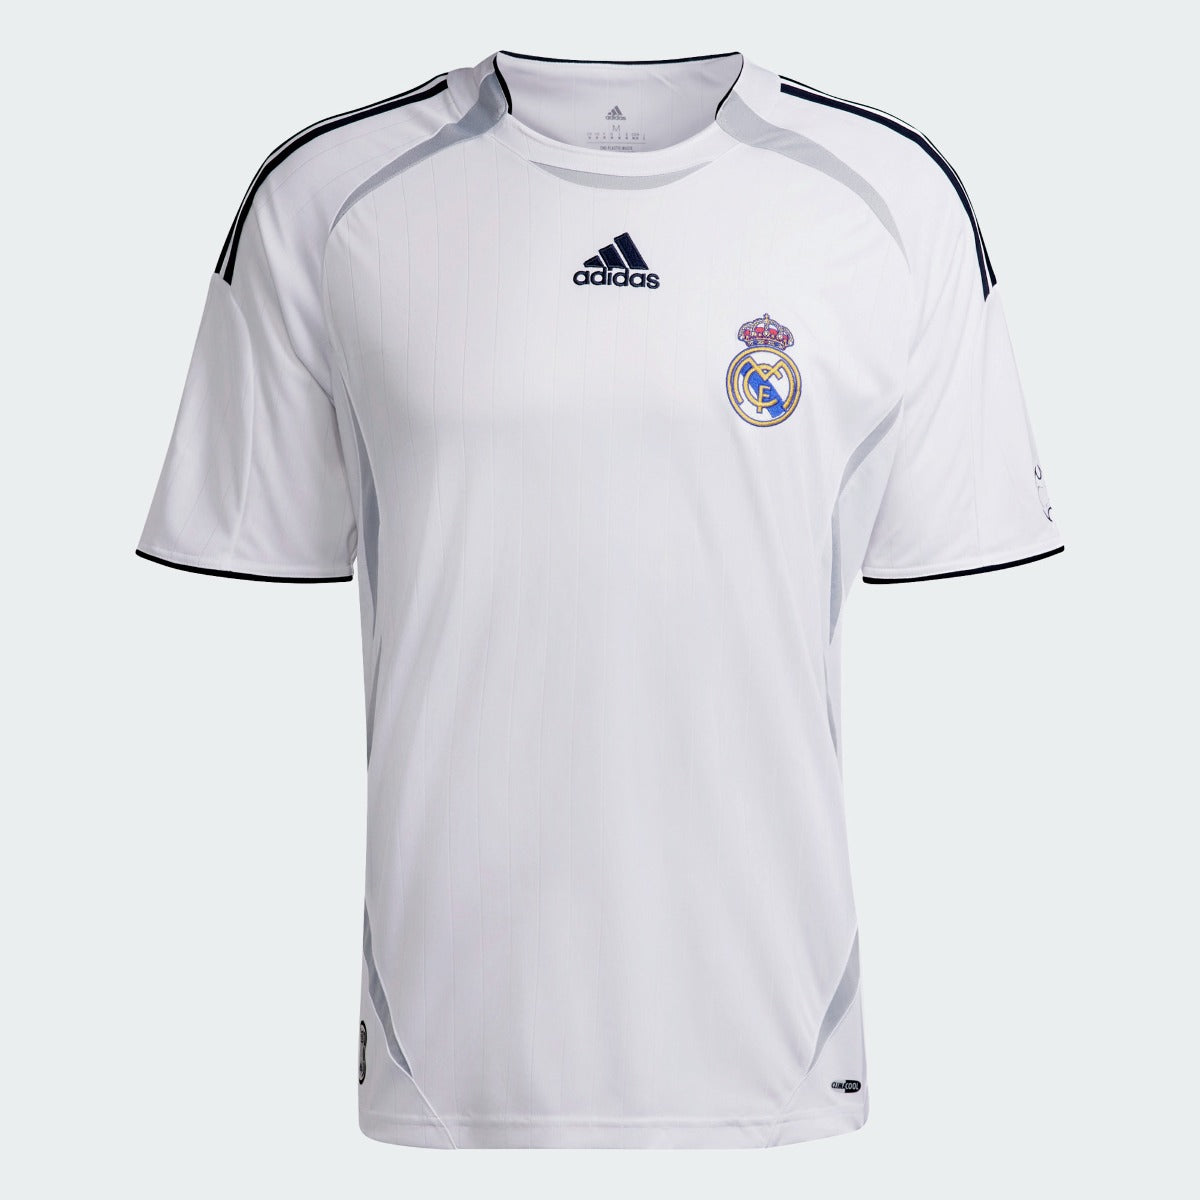 Adidas 2022 Real Madrid Teamgeist Jersey - White